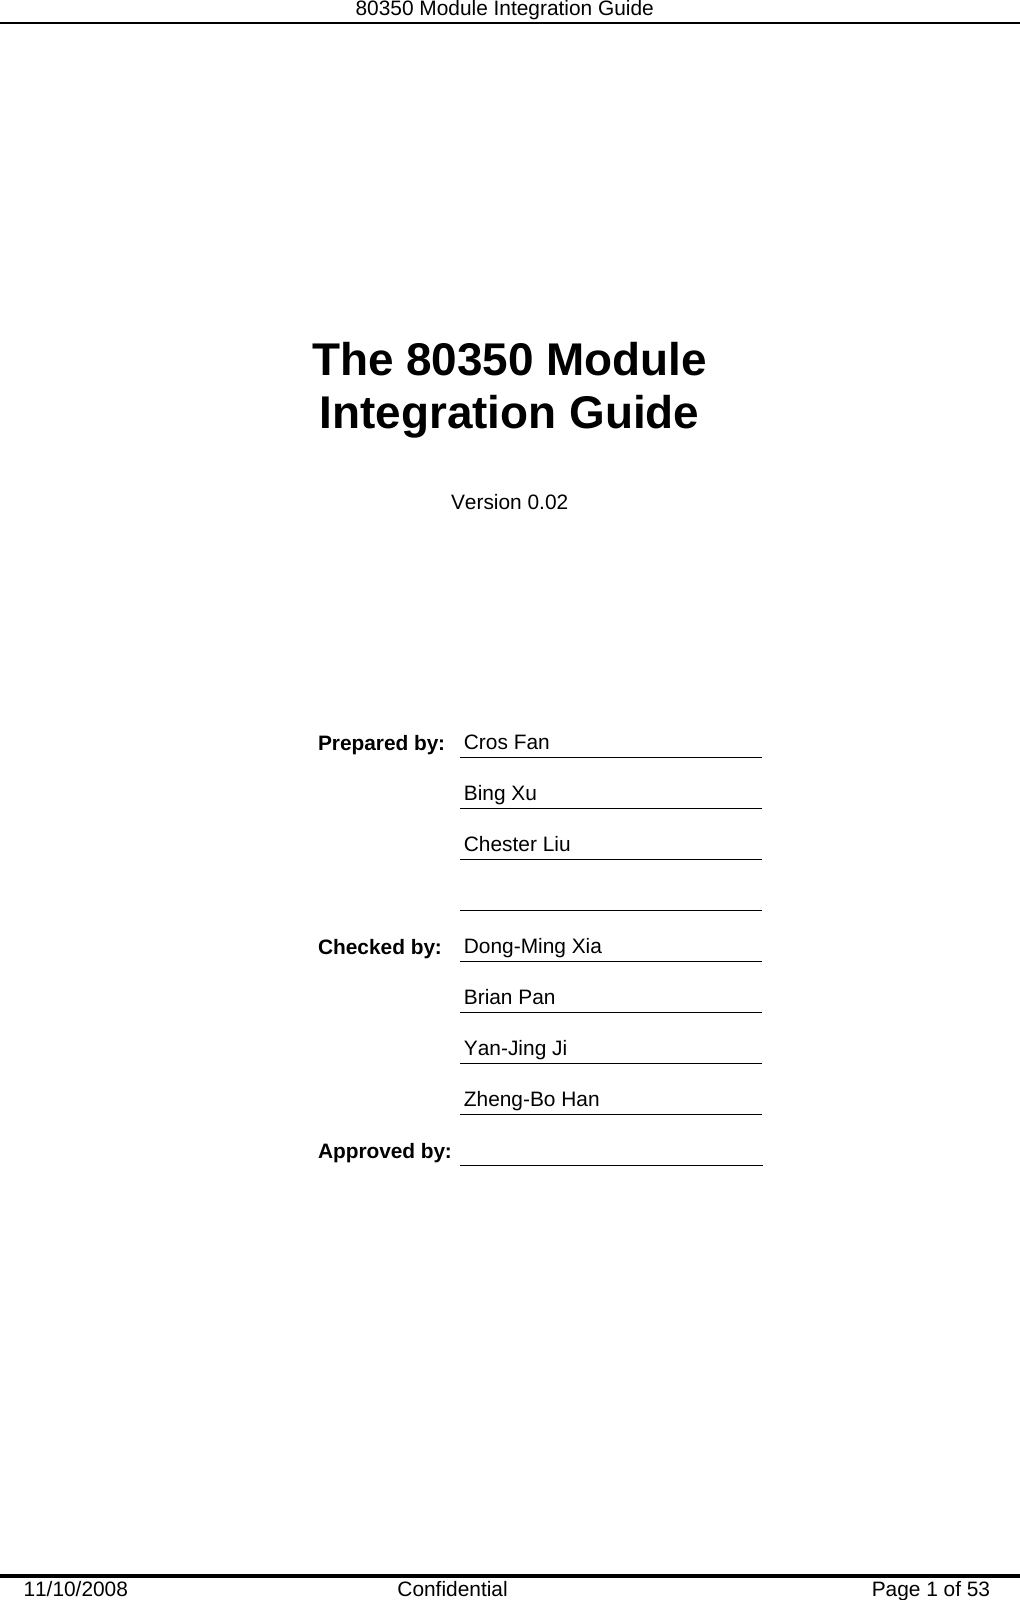   80350 Module Integration Guide  11/10/2008    Confidential  Page 1 of 53           The 80350 Module Integration Guide  Version 0.02           Cros Fan  Bing Xu  Chester Liu  Prepared by:  Dong-Ming Xia  Brian Pan  Yan-Jing Ji  Checked by: Zheng-Bo Han  Approved by:    